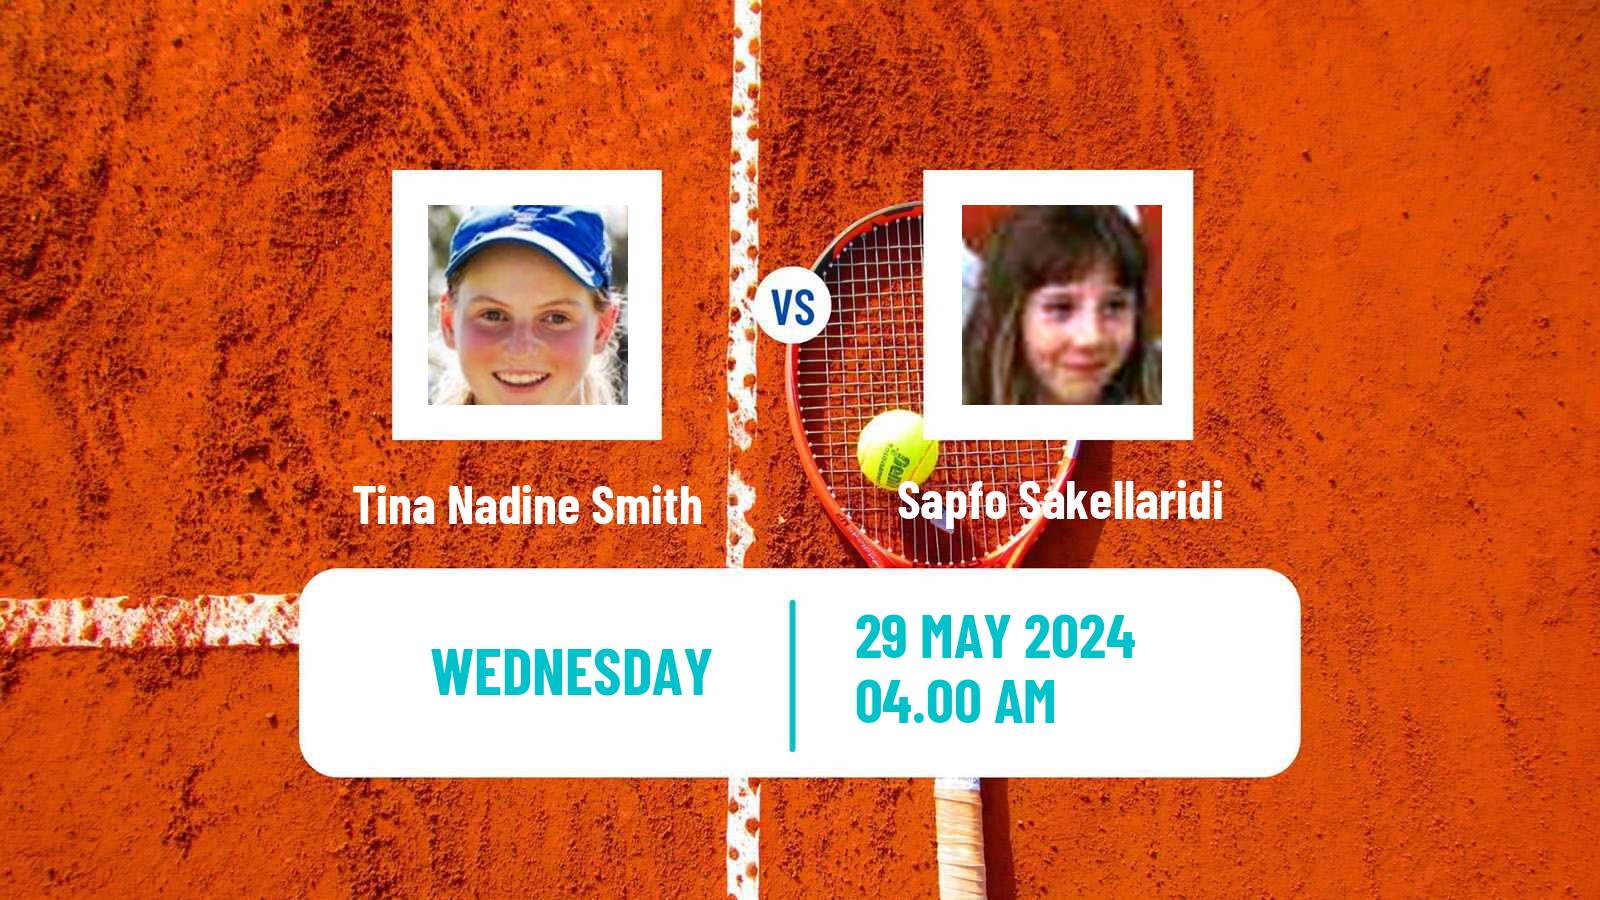 Tennis ITF W50 Otocec 2 Women Tina Nadine Smith - Sapfo Sakellaridi